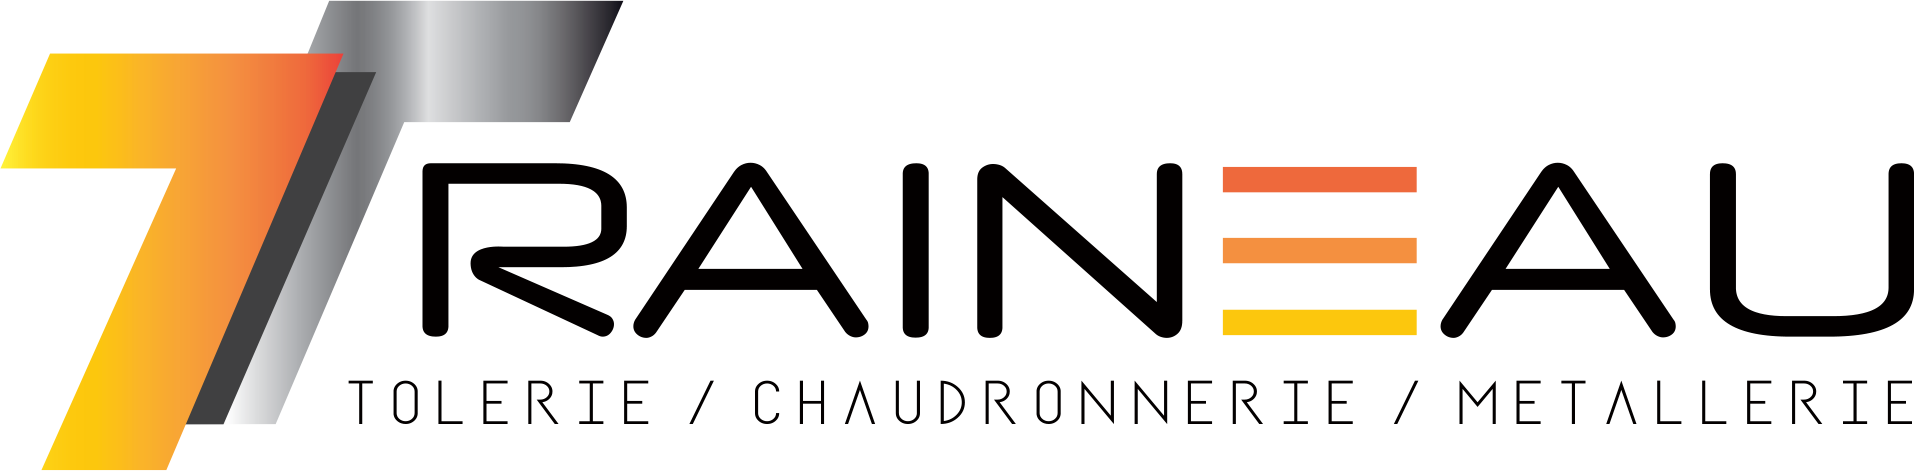 logo traineau construction